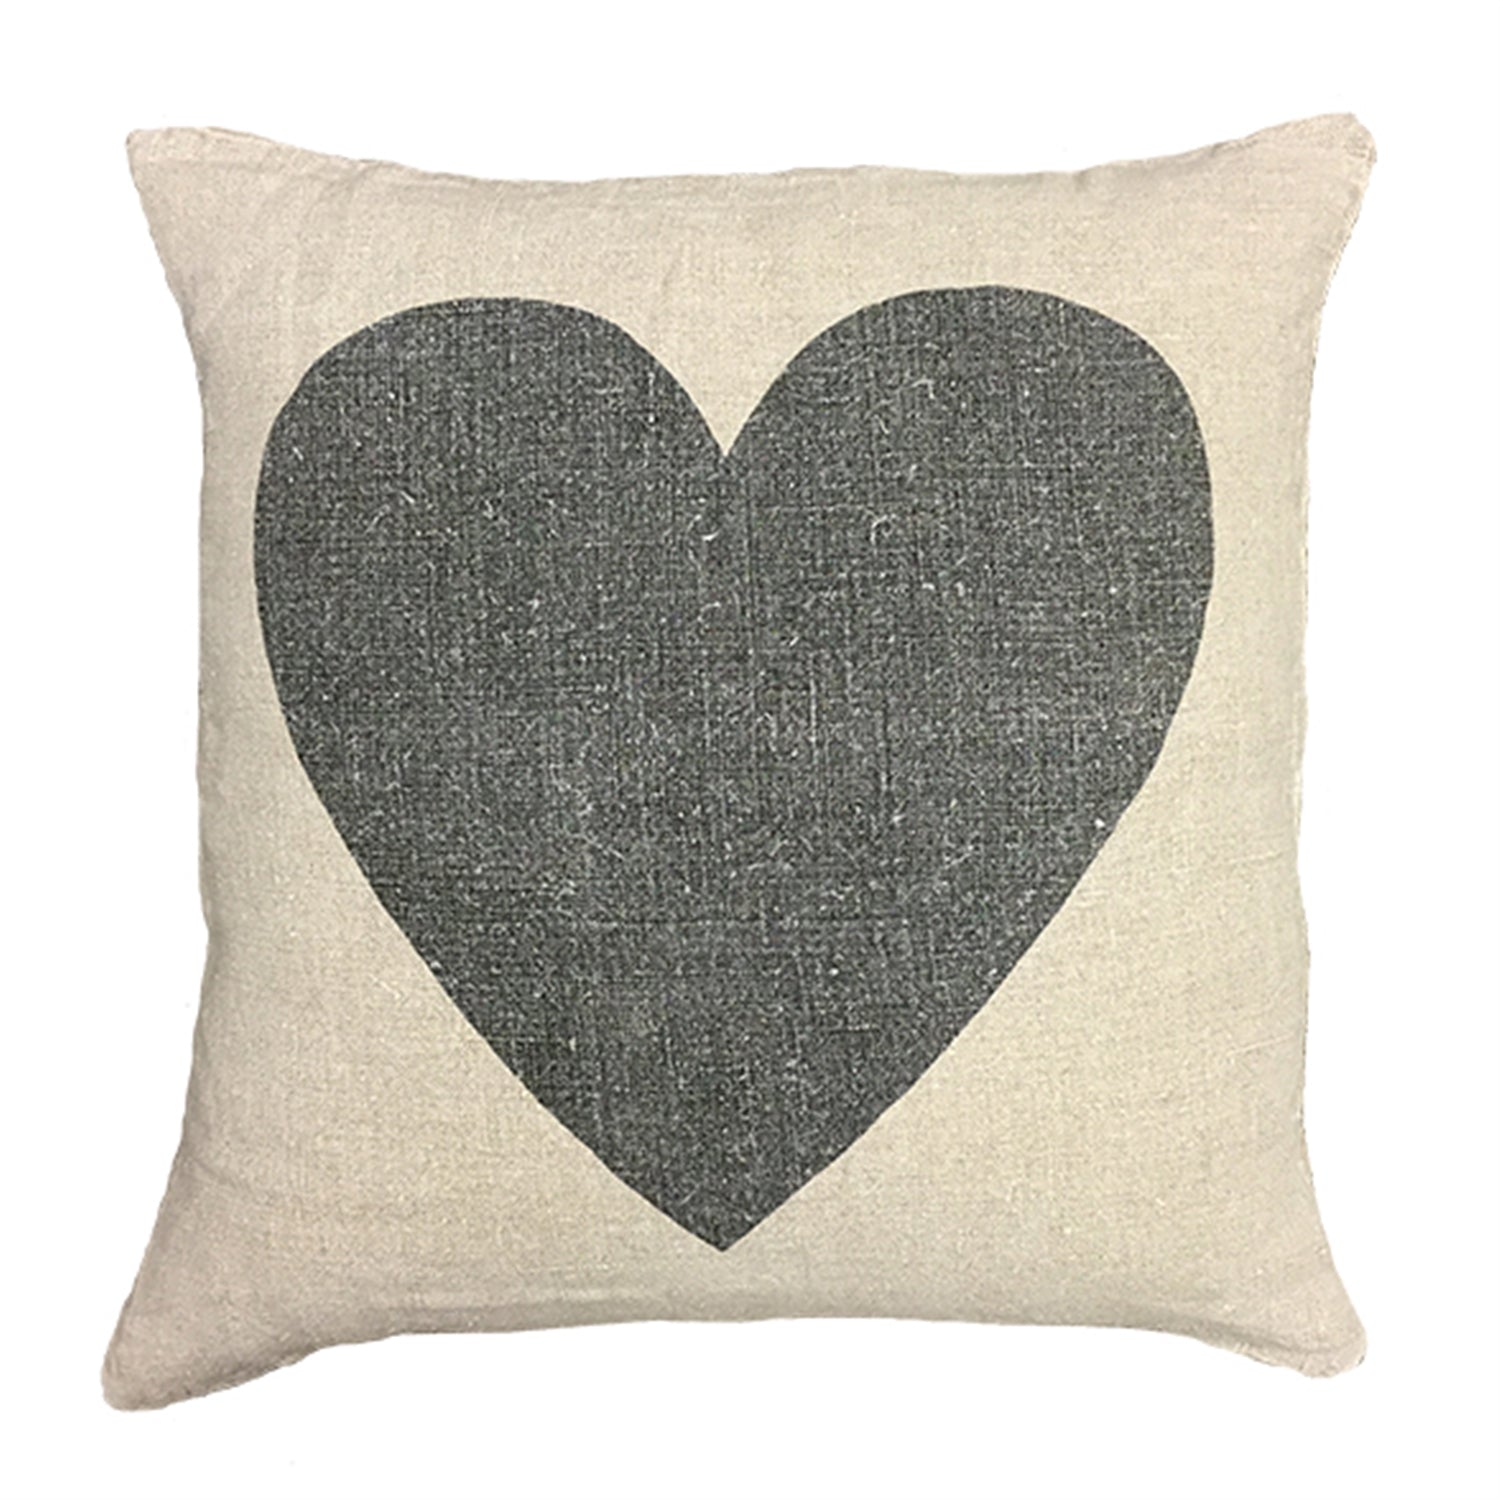 Sugarboo Designs Black Heart Pillow